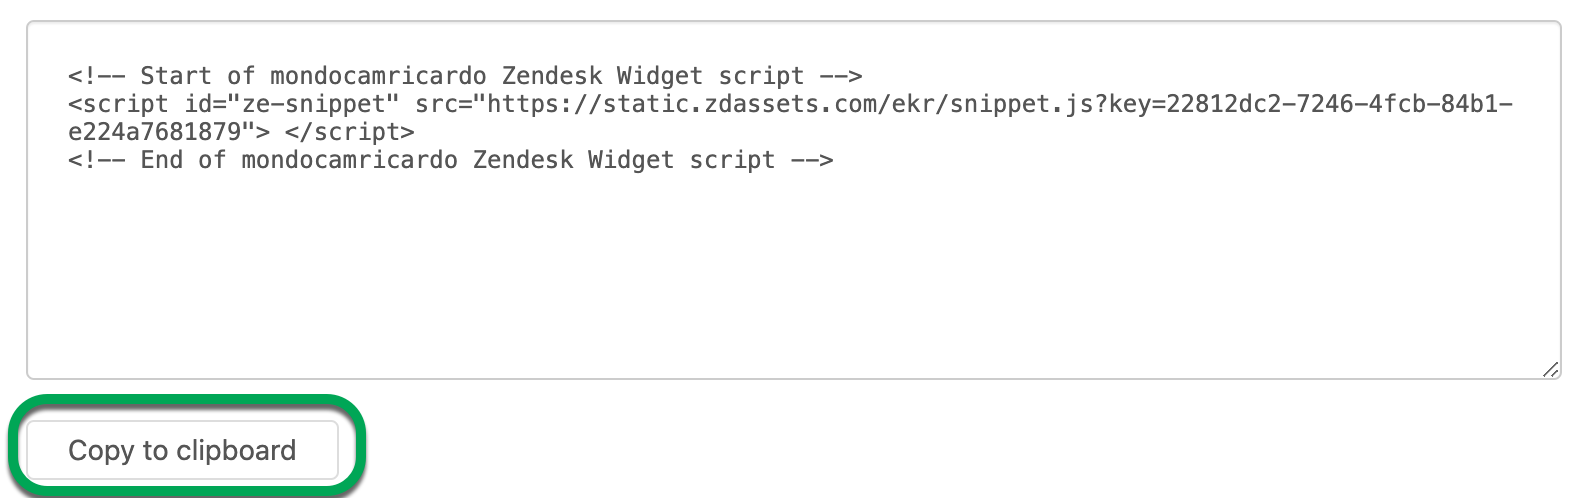 Web widget script